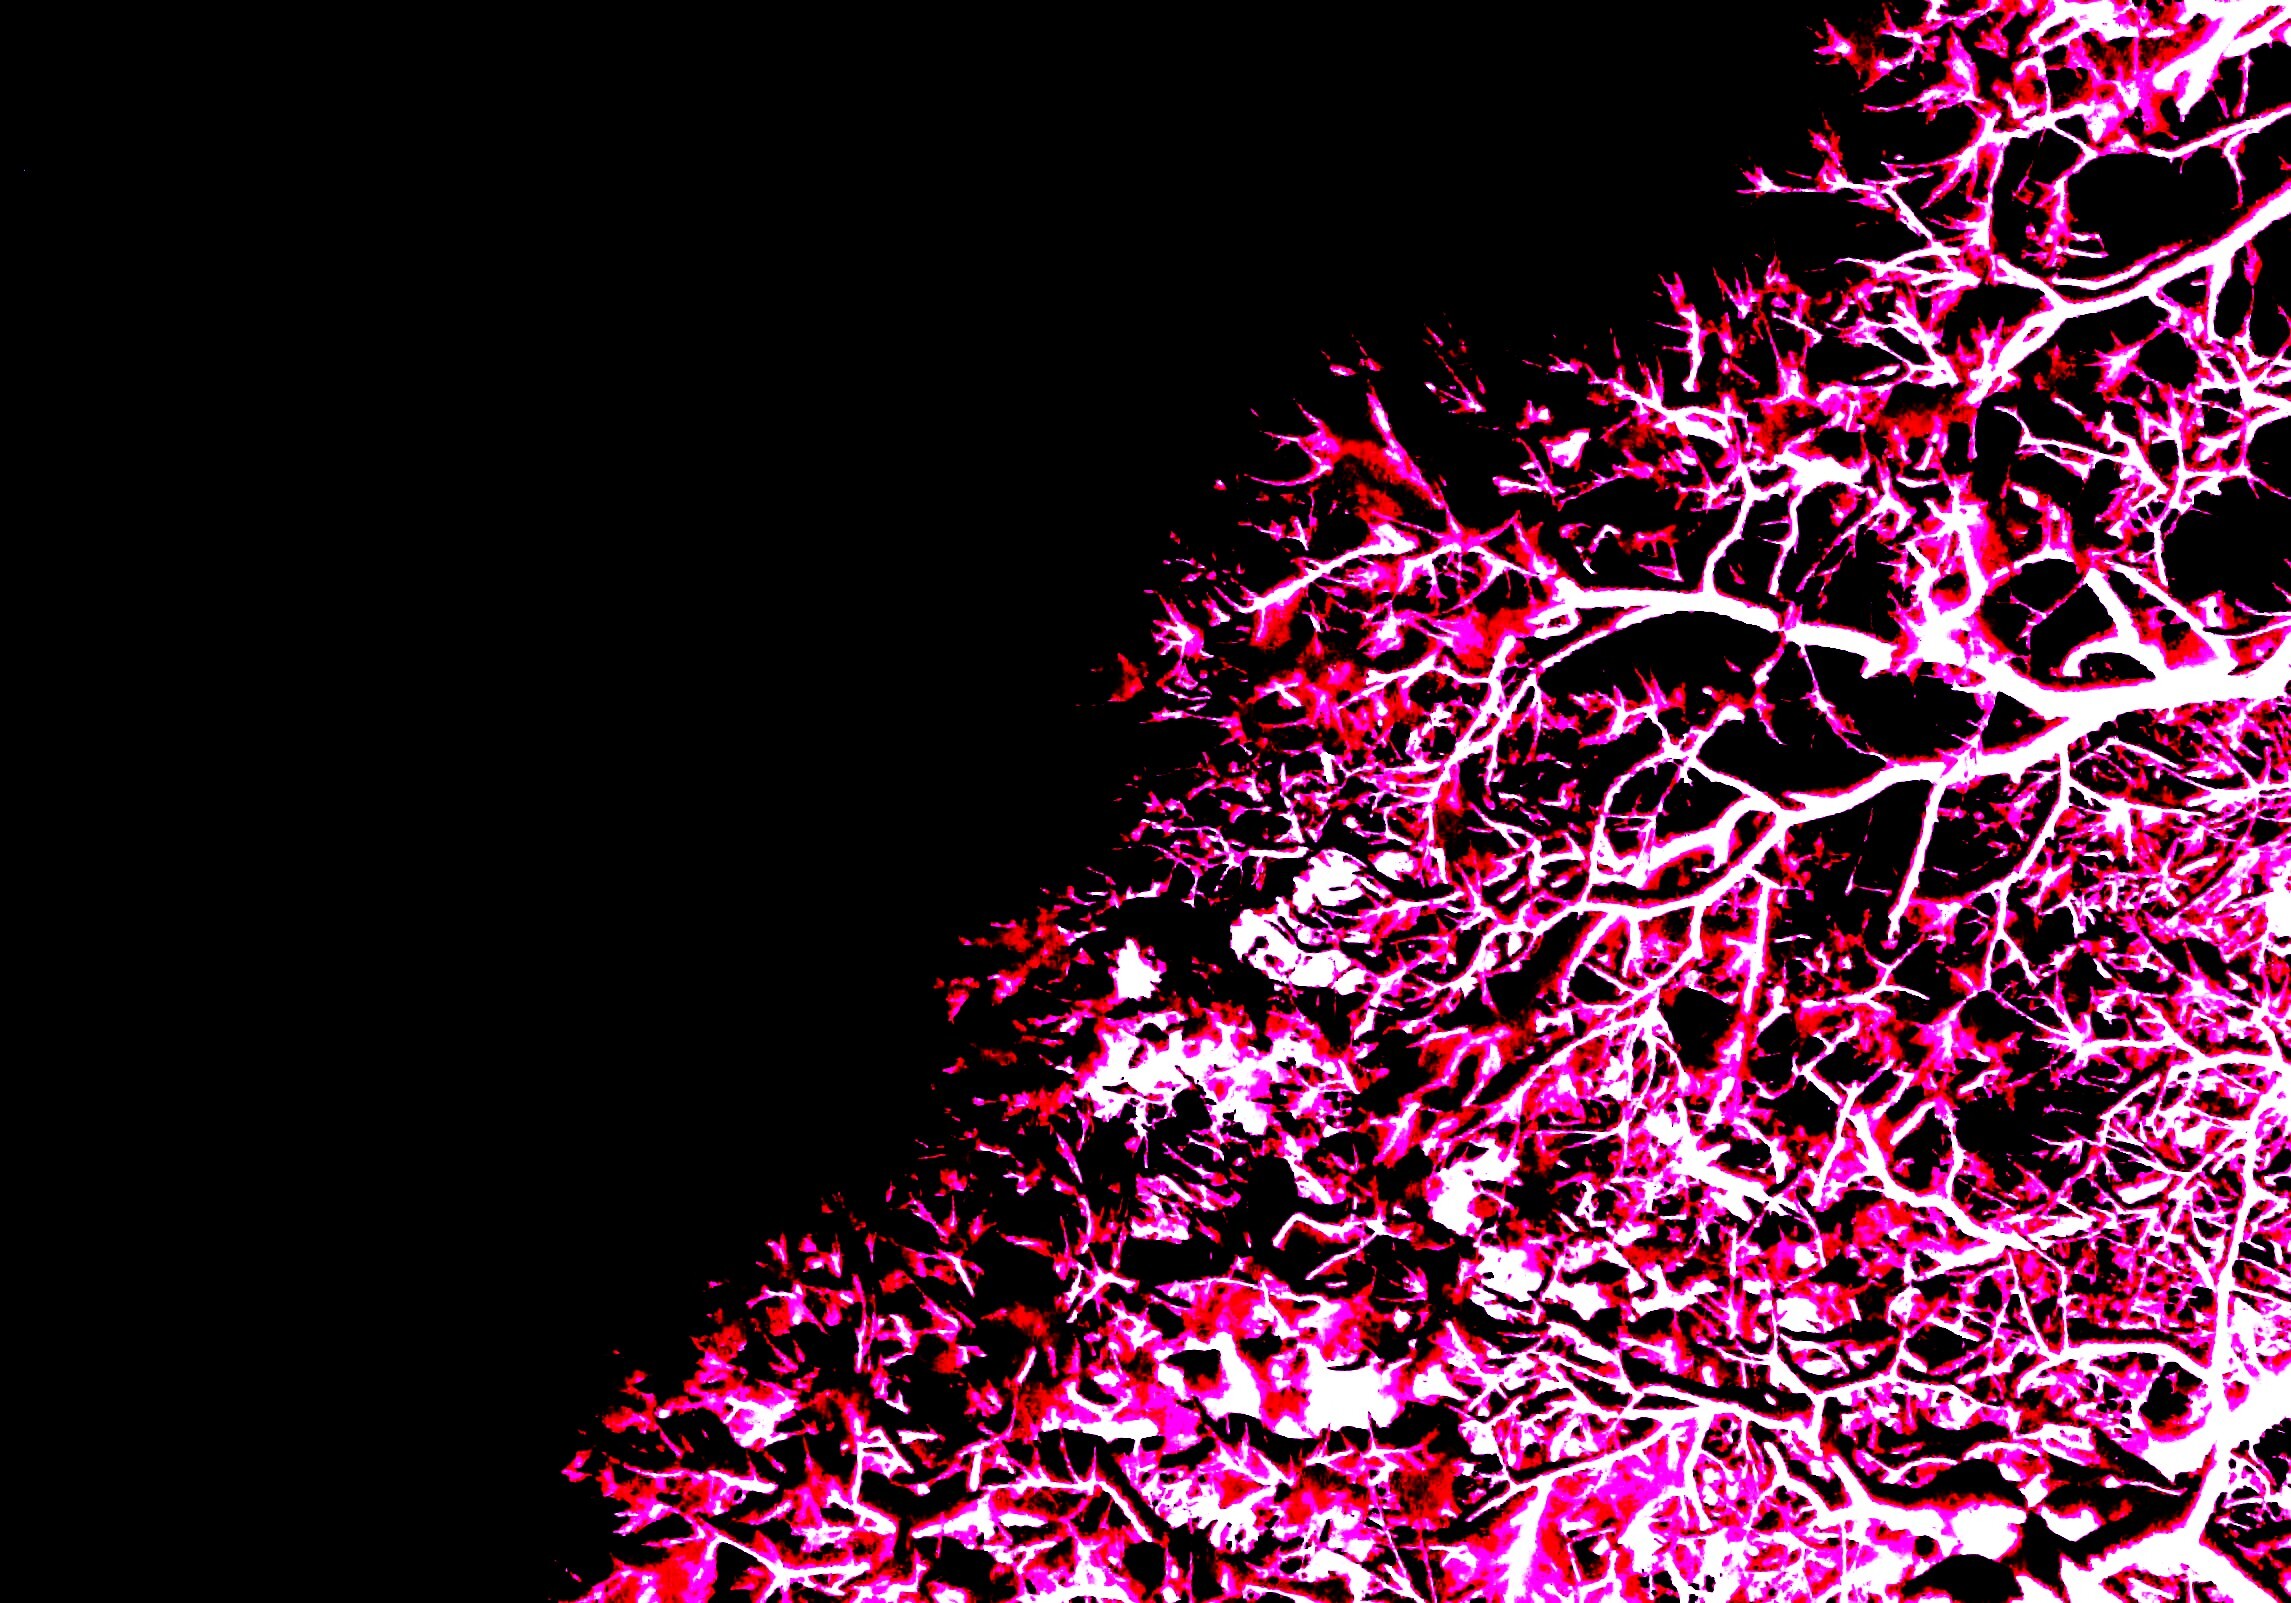 Glow in the Dark: Vivid leaves, Neon tree, Magenta spectrum, Abstract. 2300x1610 HD Wallpaper.